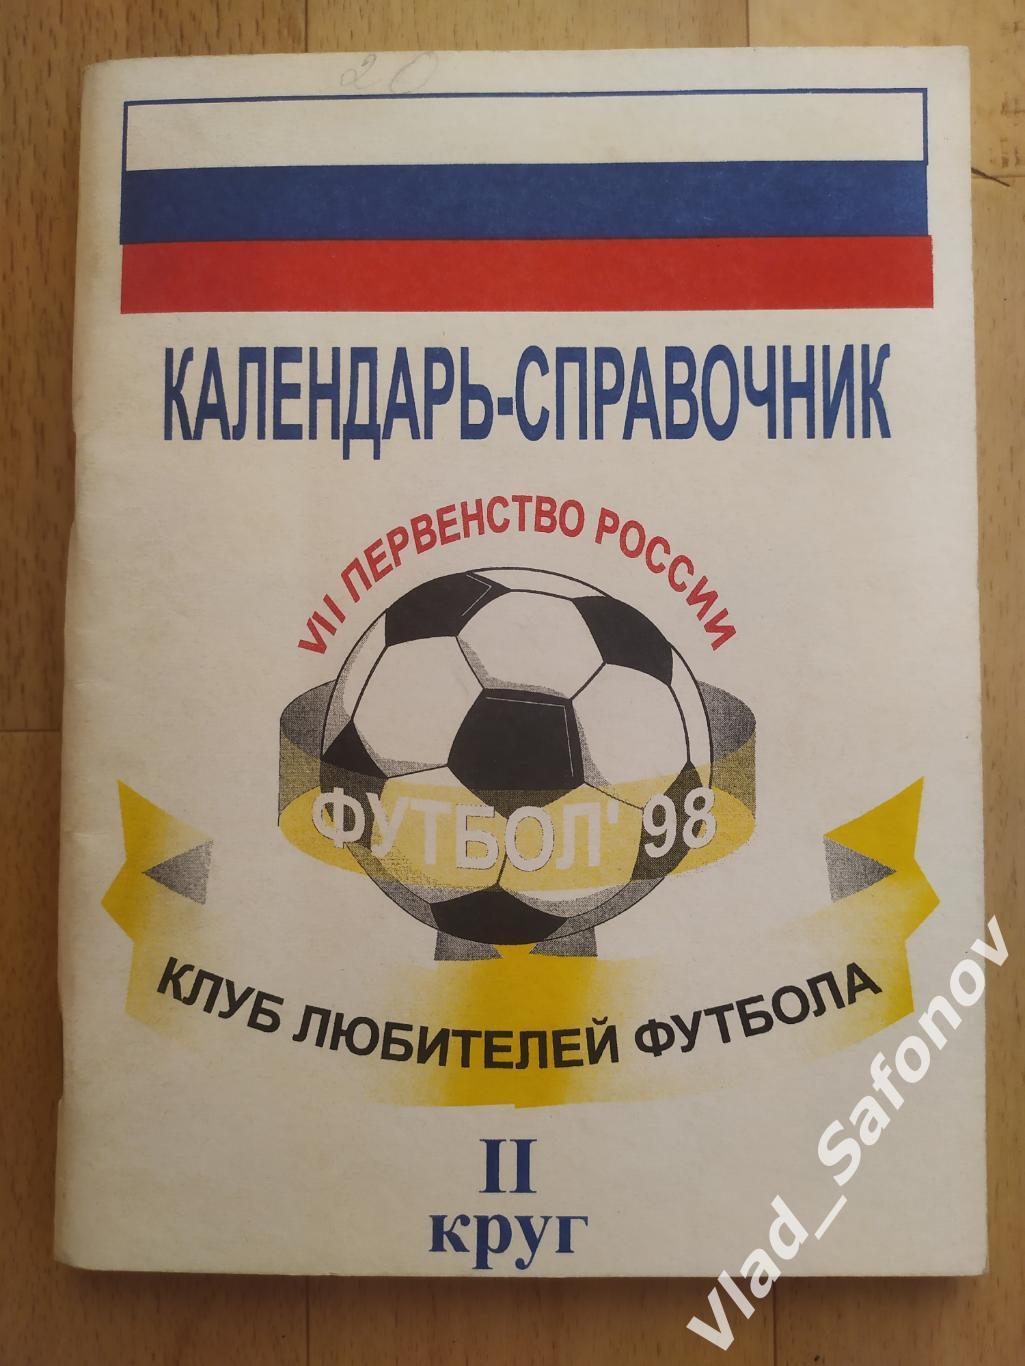 Календарь справочник. Футбол 1998. Томск. 2 круг.